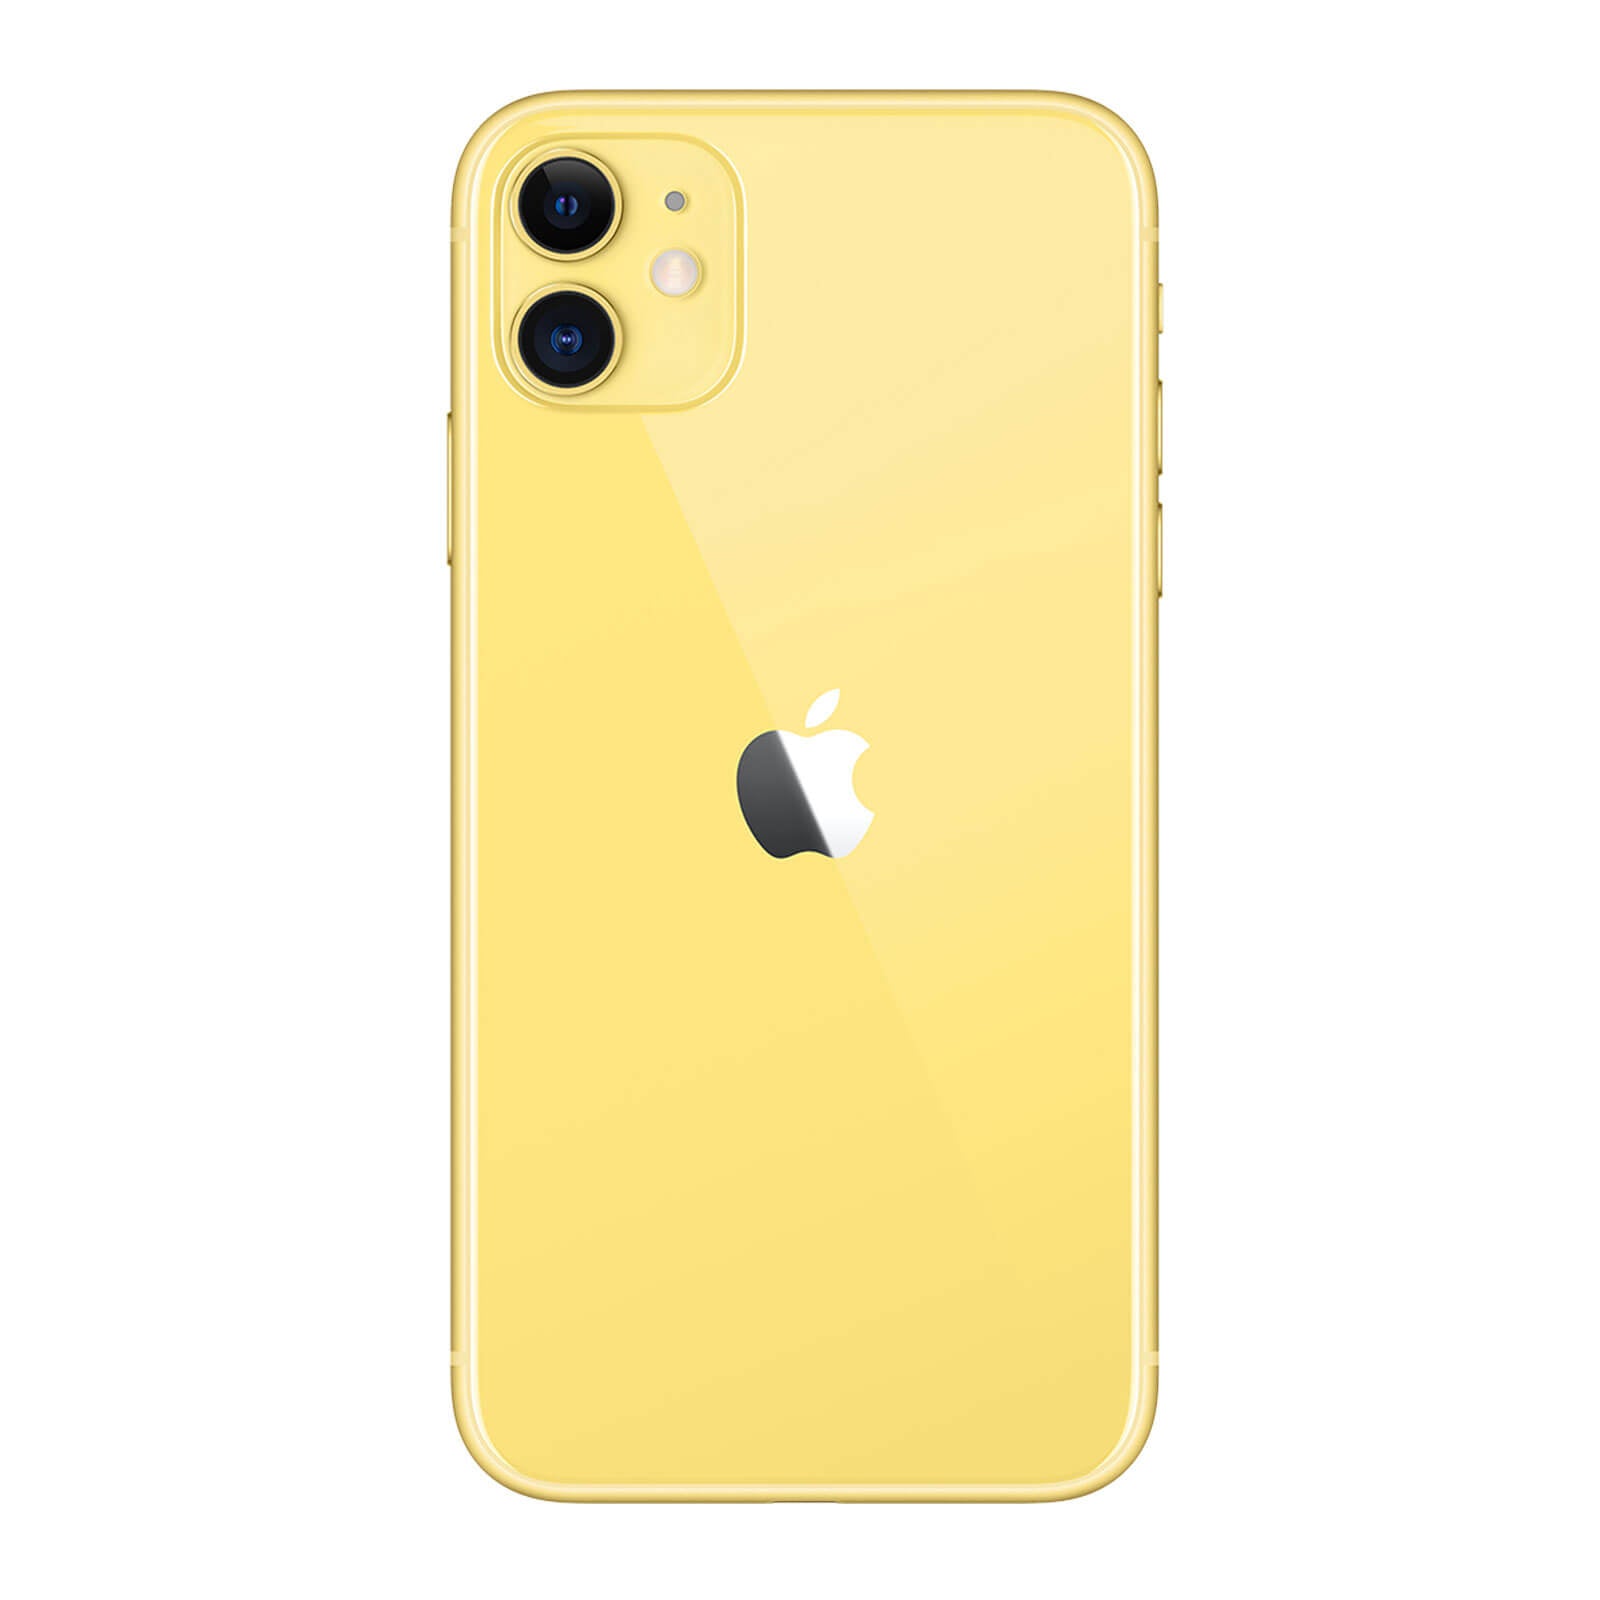 Apple iPhone 11 128GB Yellow Good - Verizon